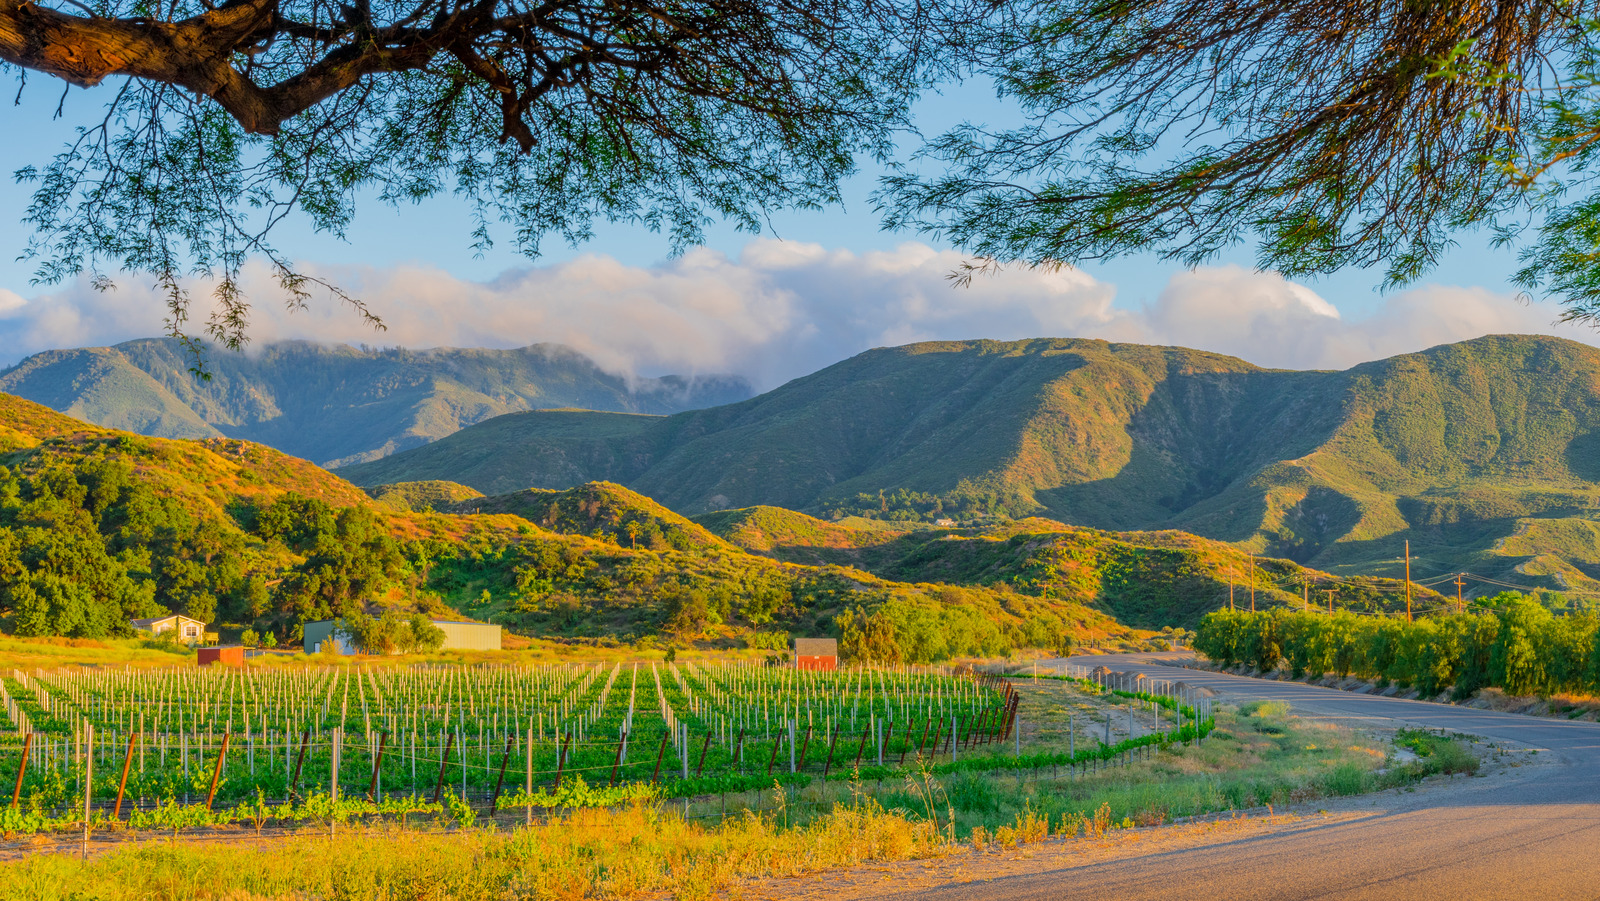 California's Temecula wine region is just like Tuscany, per Samantha Brown